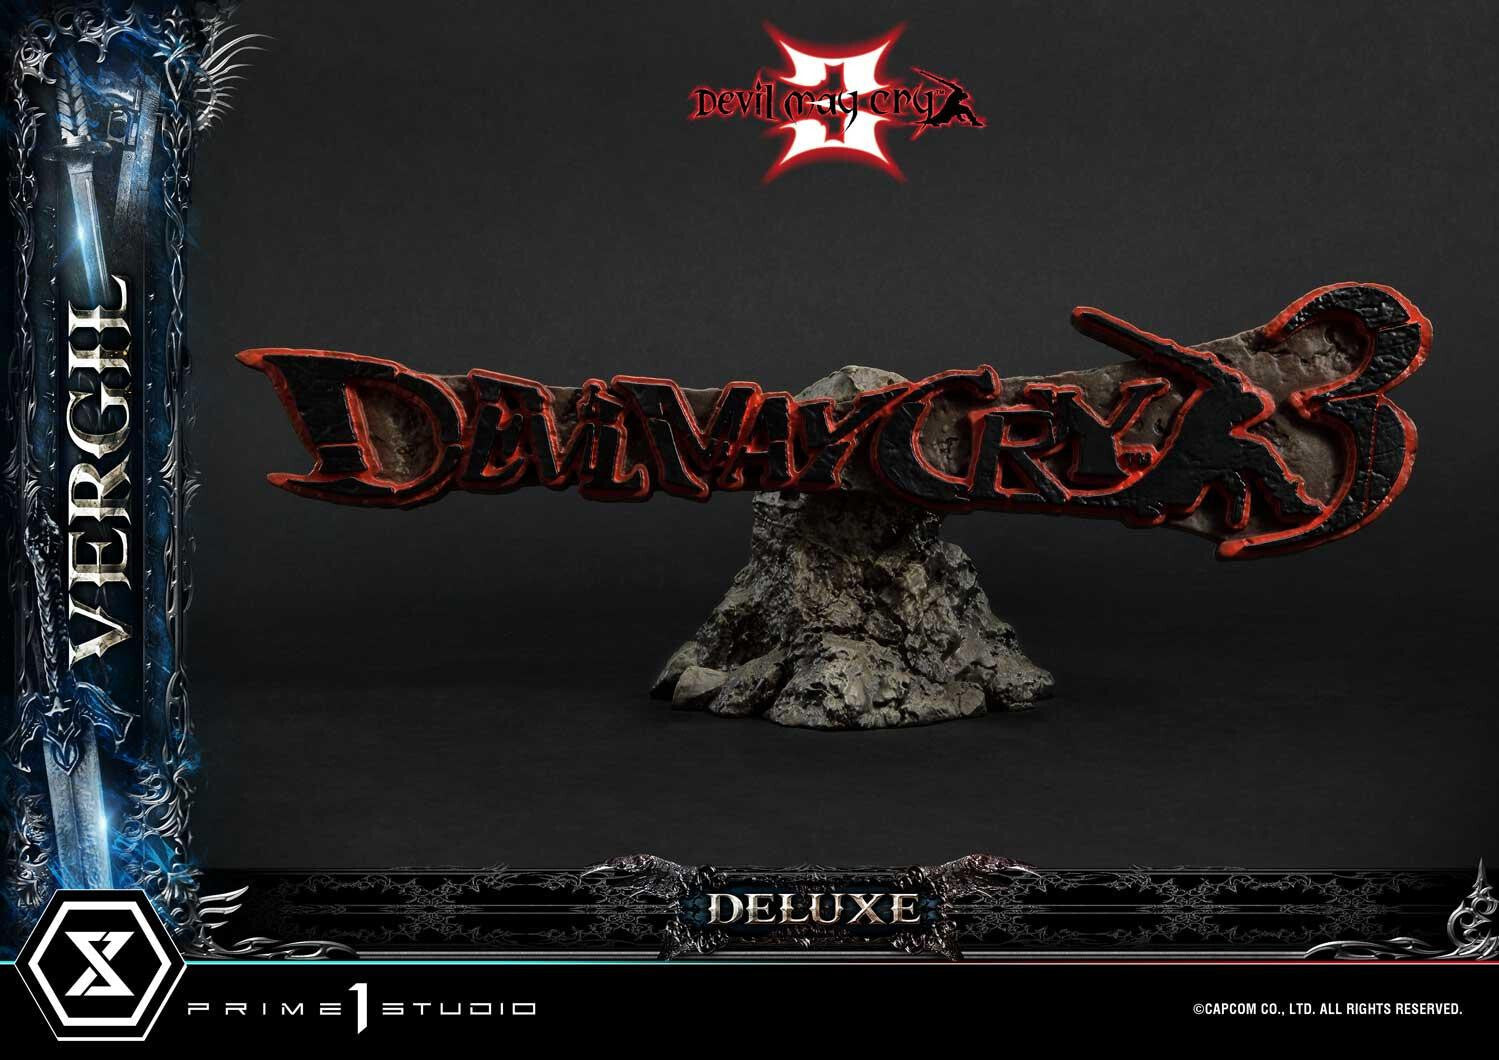 Devil May Cry 5: Vergil Exclusive Version 1/4 Statue - Prime 1 Studio